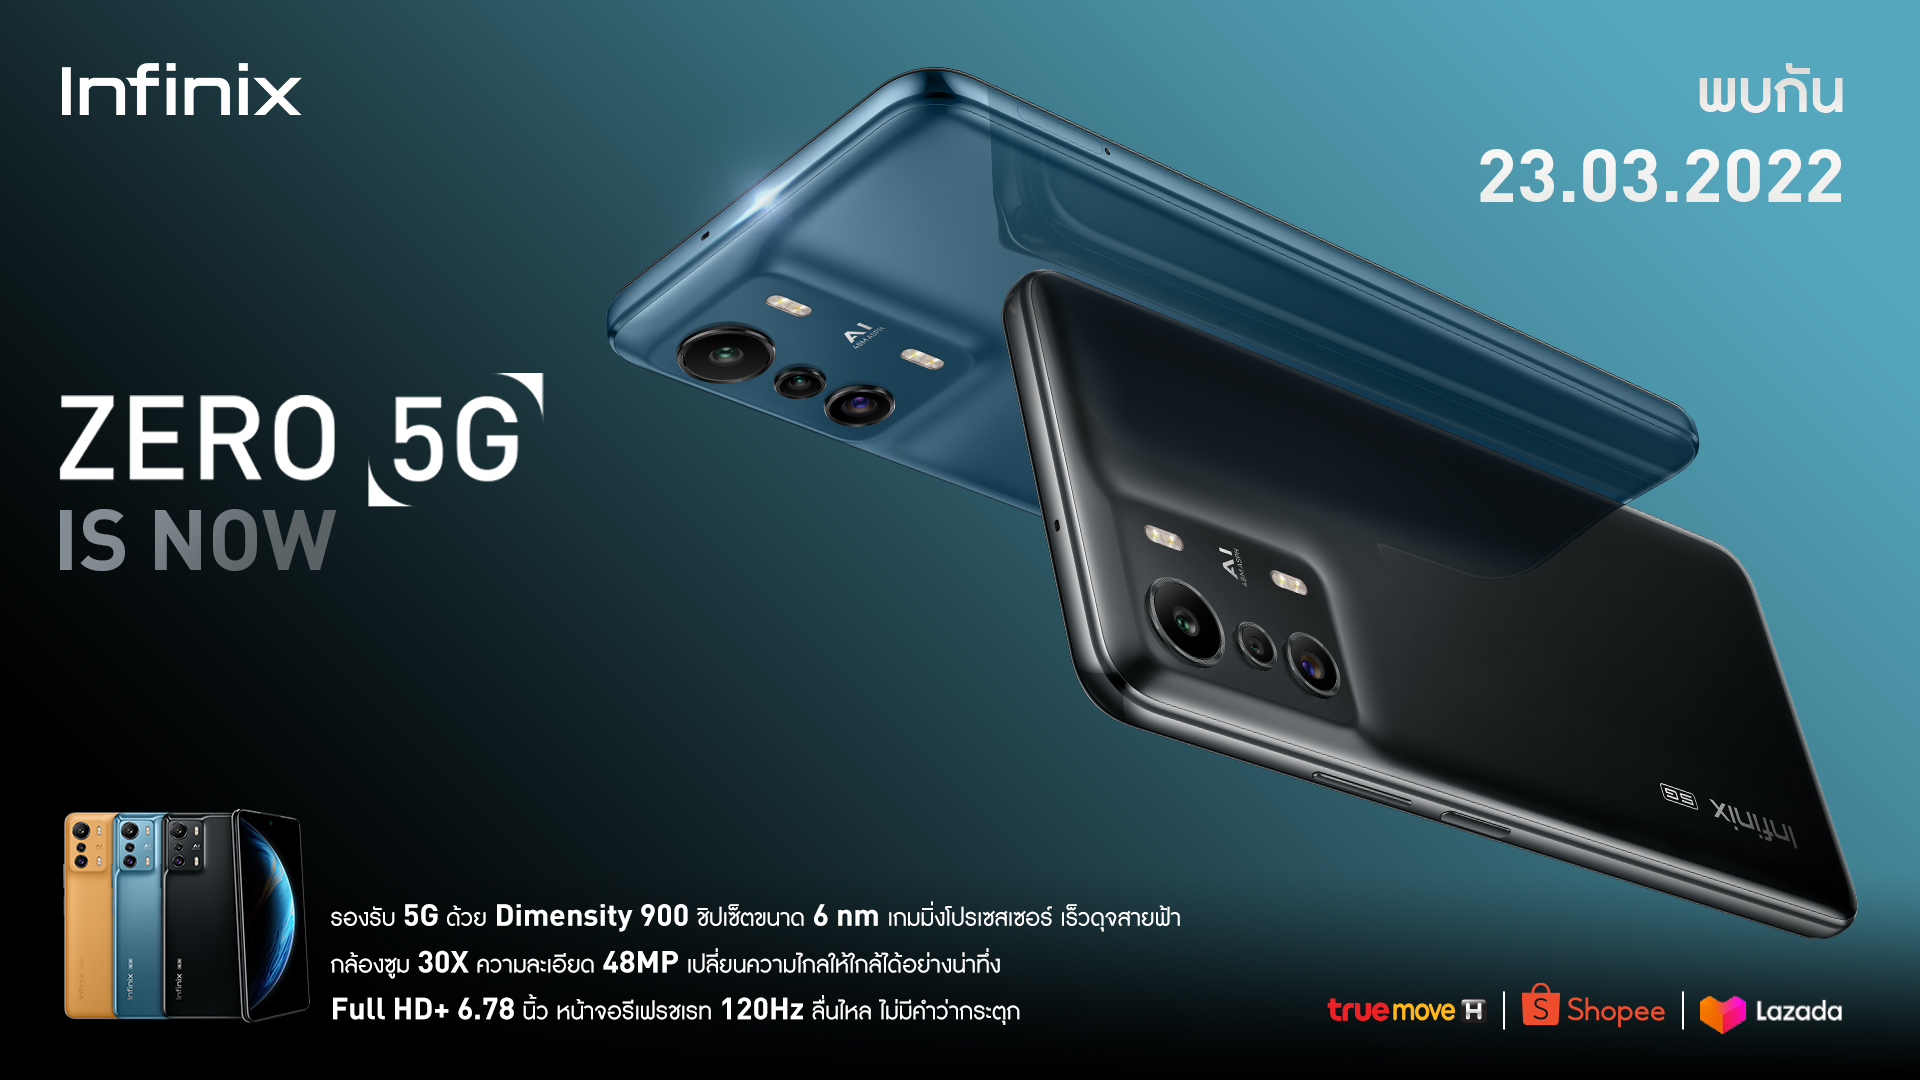 Infinix เตรียมปล่อย ZERO 5G มือถือ 5G รุ่นแรกของค่าย พร้อมขาย 23 มีนาคมนี้ กับ MediaTek Dimensity 900 ชิปเซ็ต 5G ตัวแรงในเรทราคา 8,000 บาท